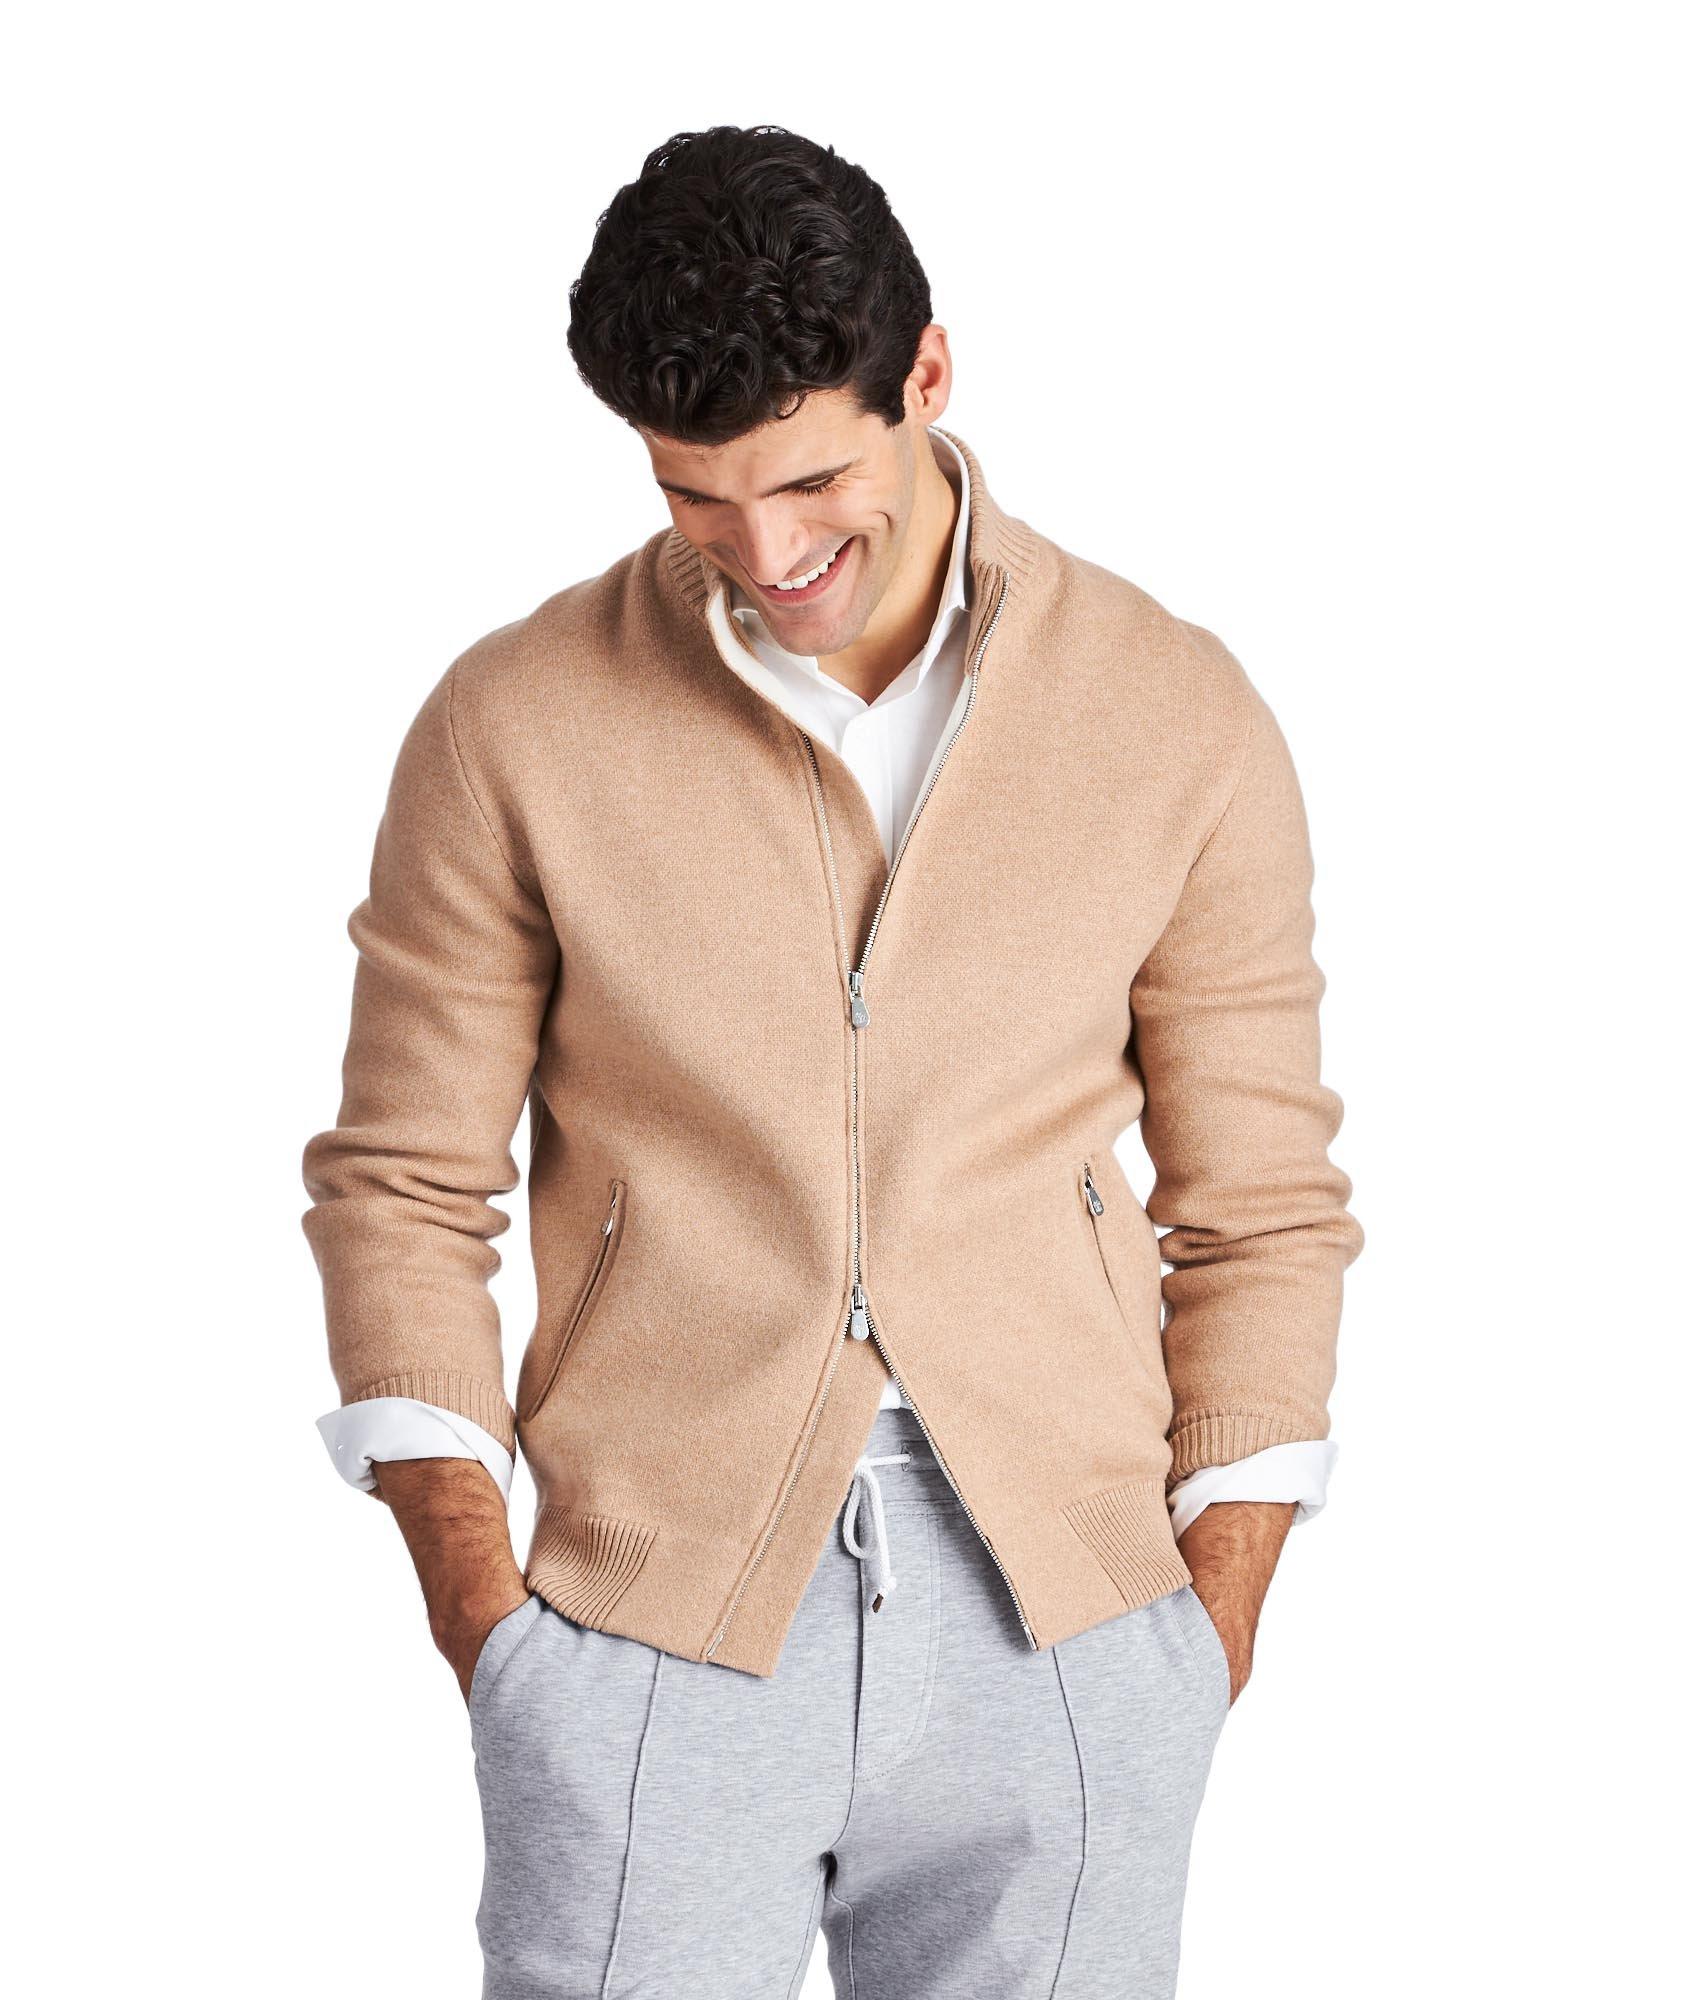  Zip-Up Wool, Cashmere & Silk Cardigan image 0